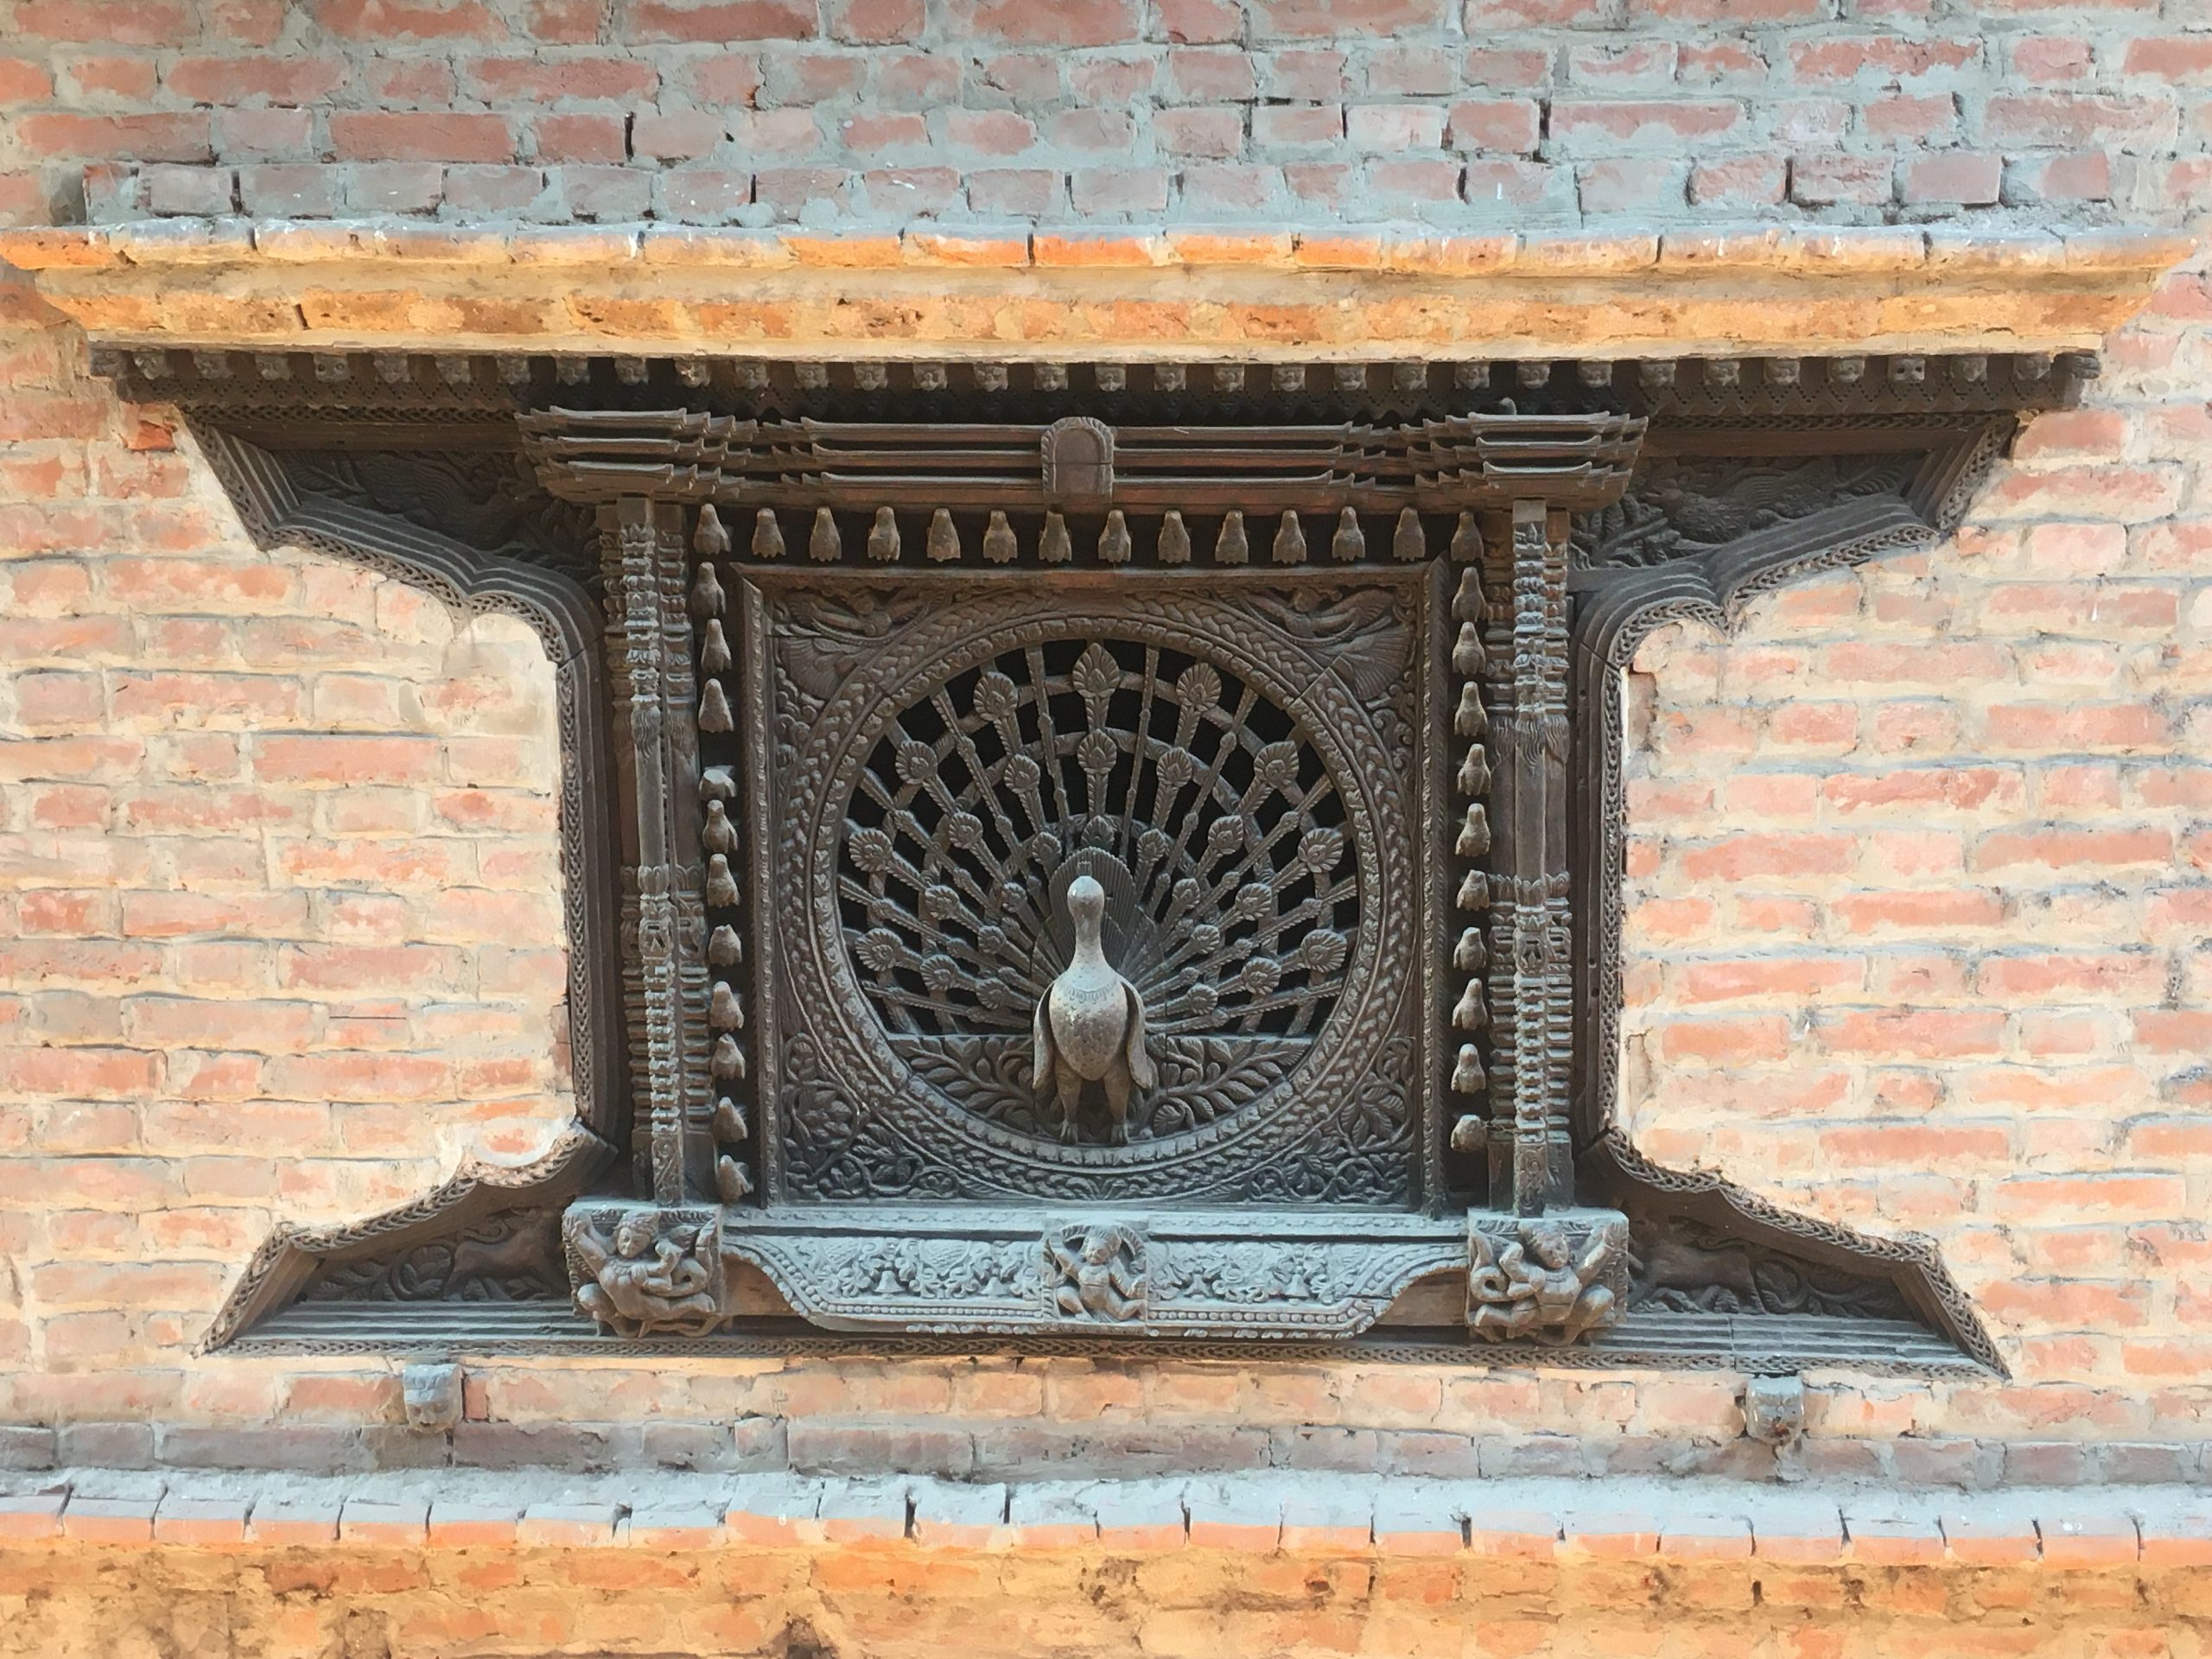 Peacock Window